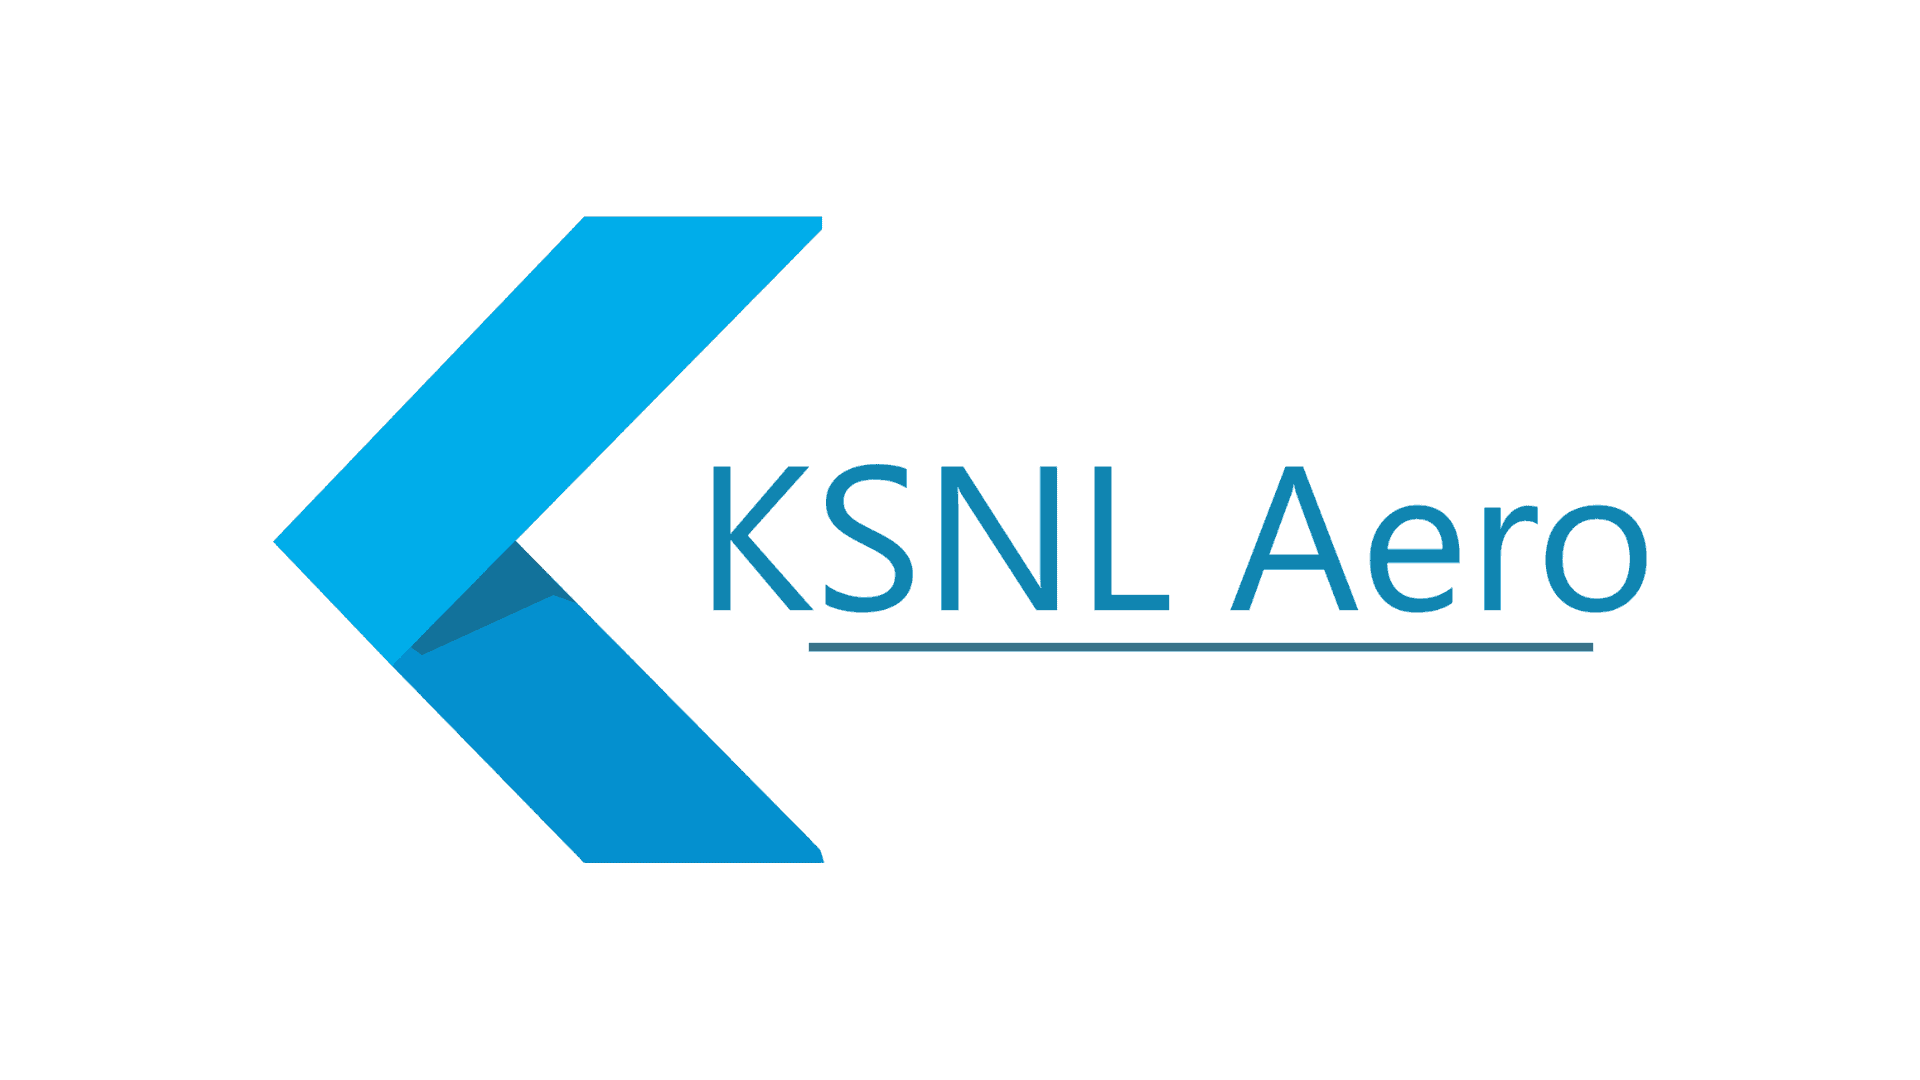 KSNL Aero ready to support regional aircraft operators